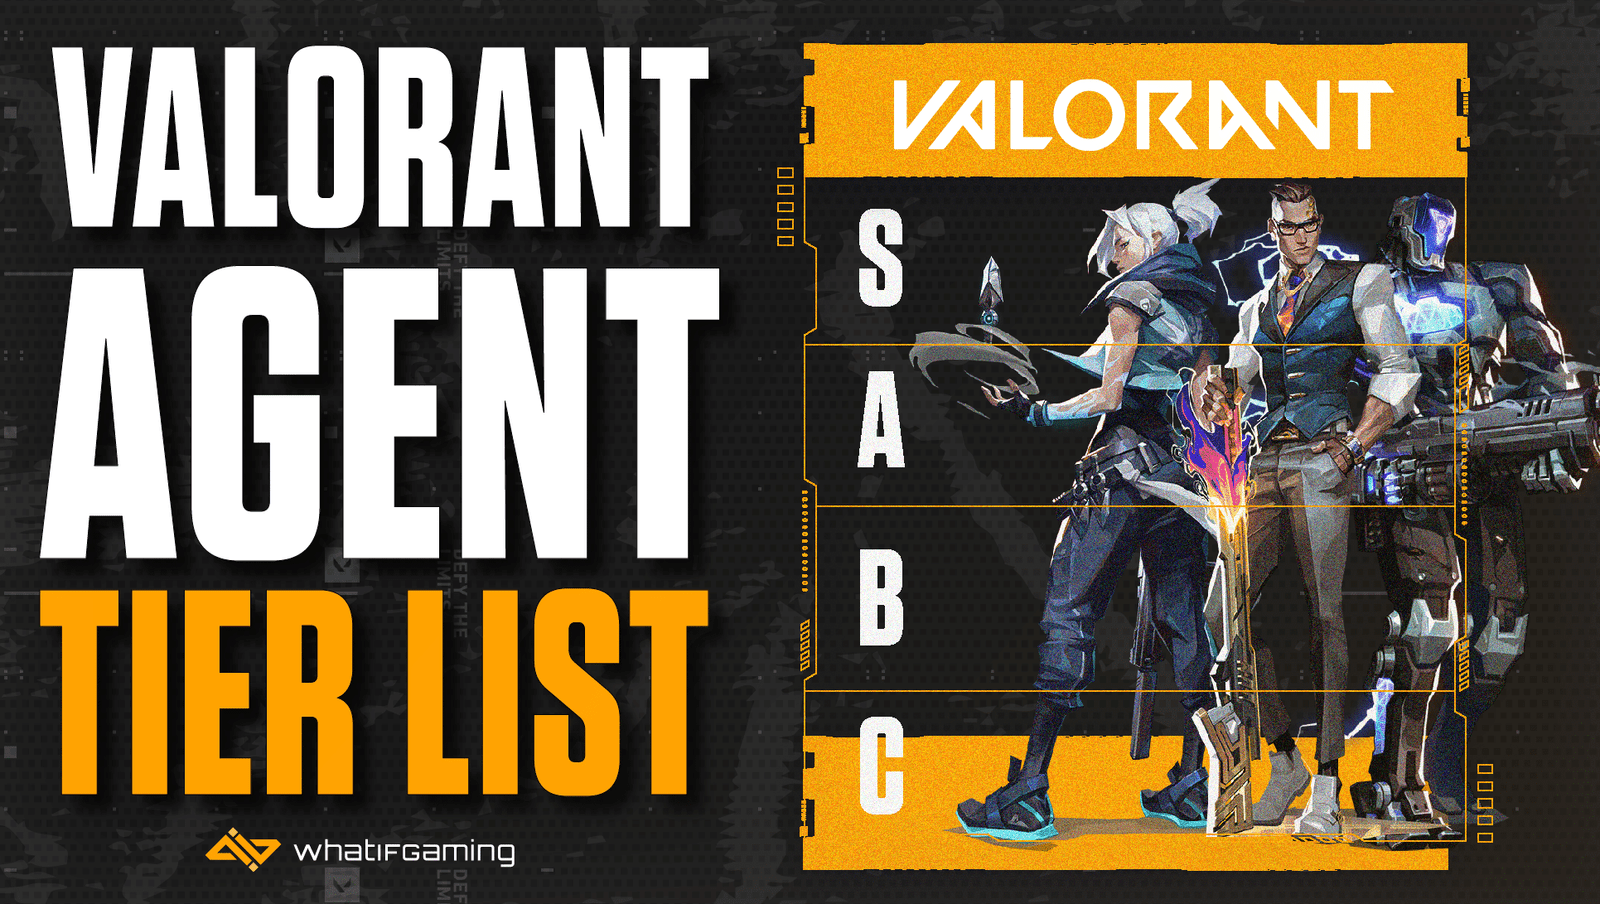 Valorant: Agents Tier List